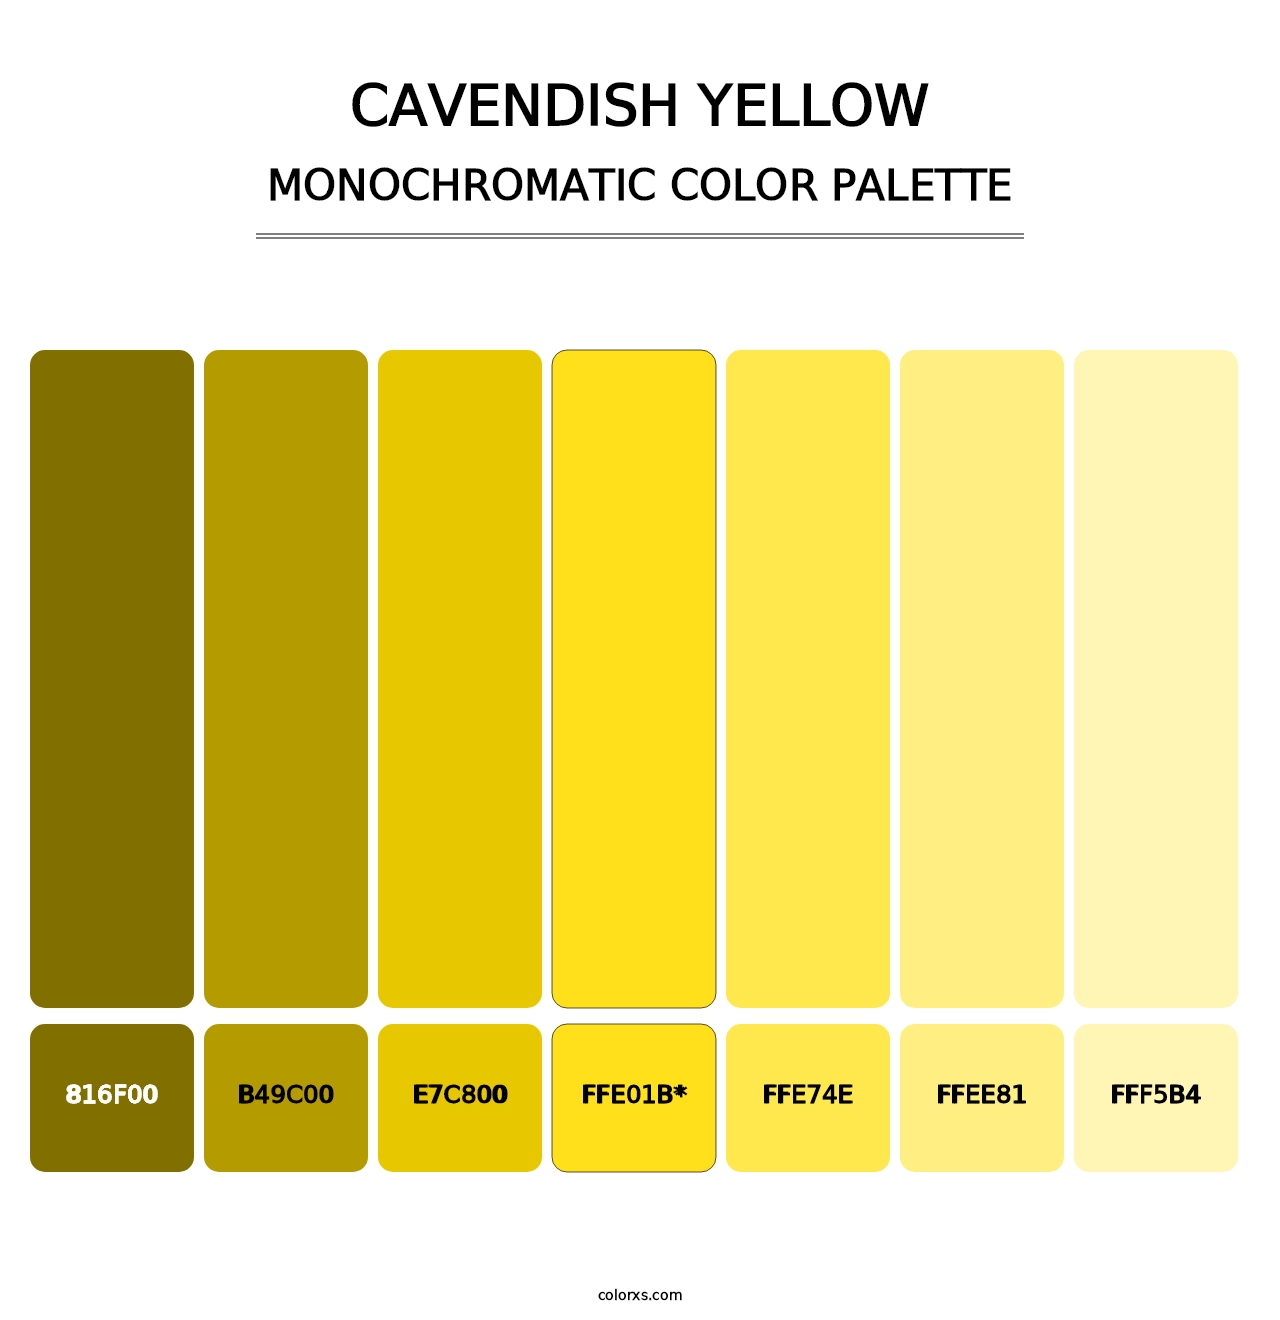 Cavendish Yellow - Monochromatic Color Palette